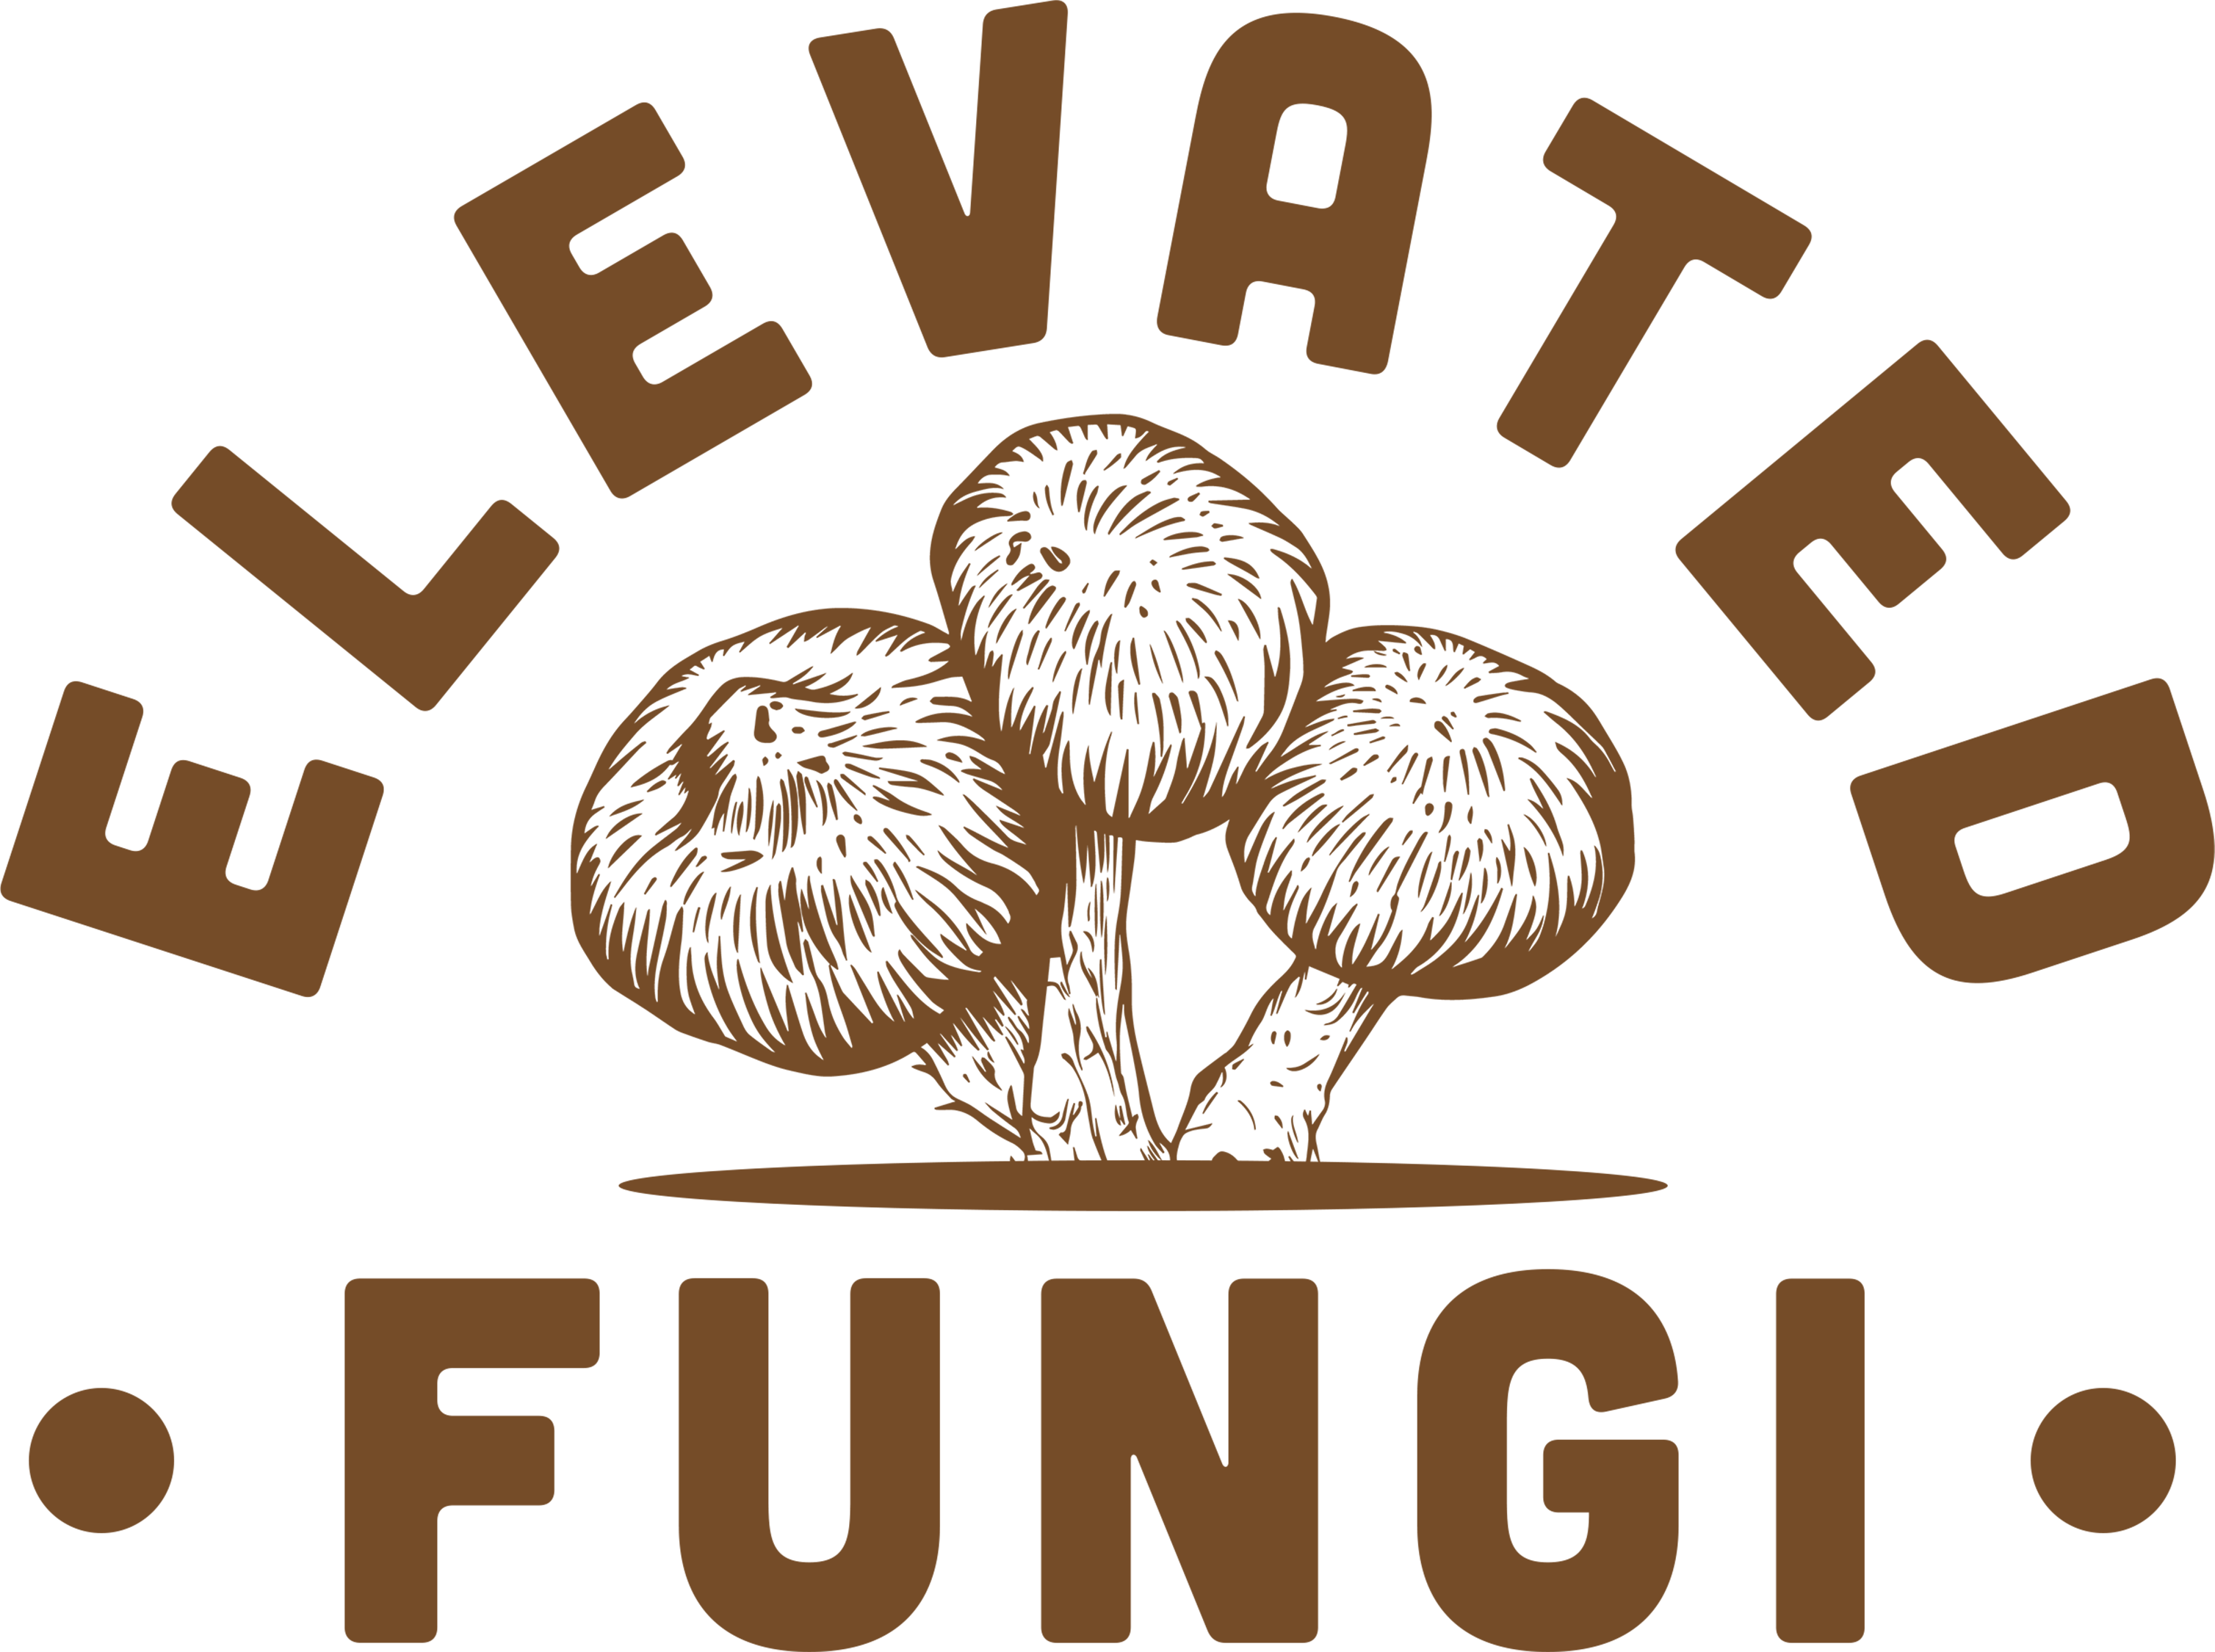 elevatedfungi logo